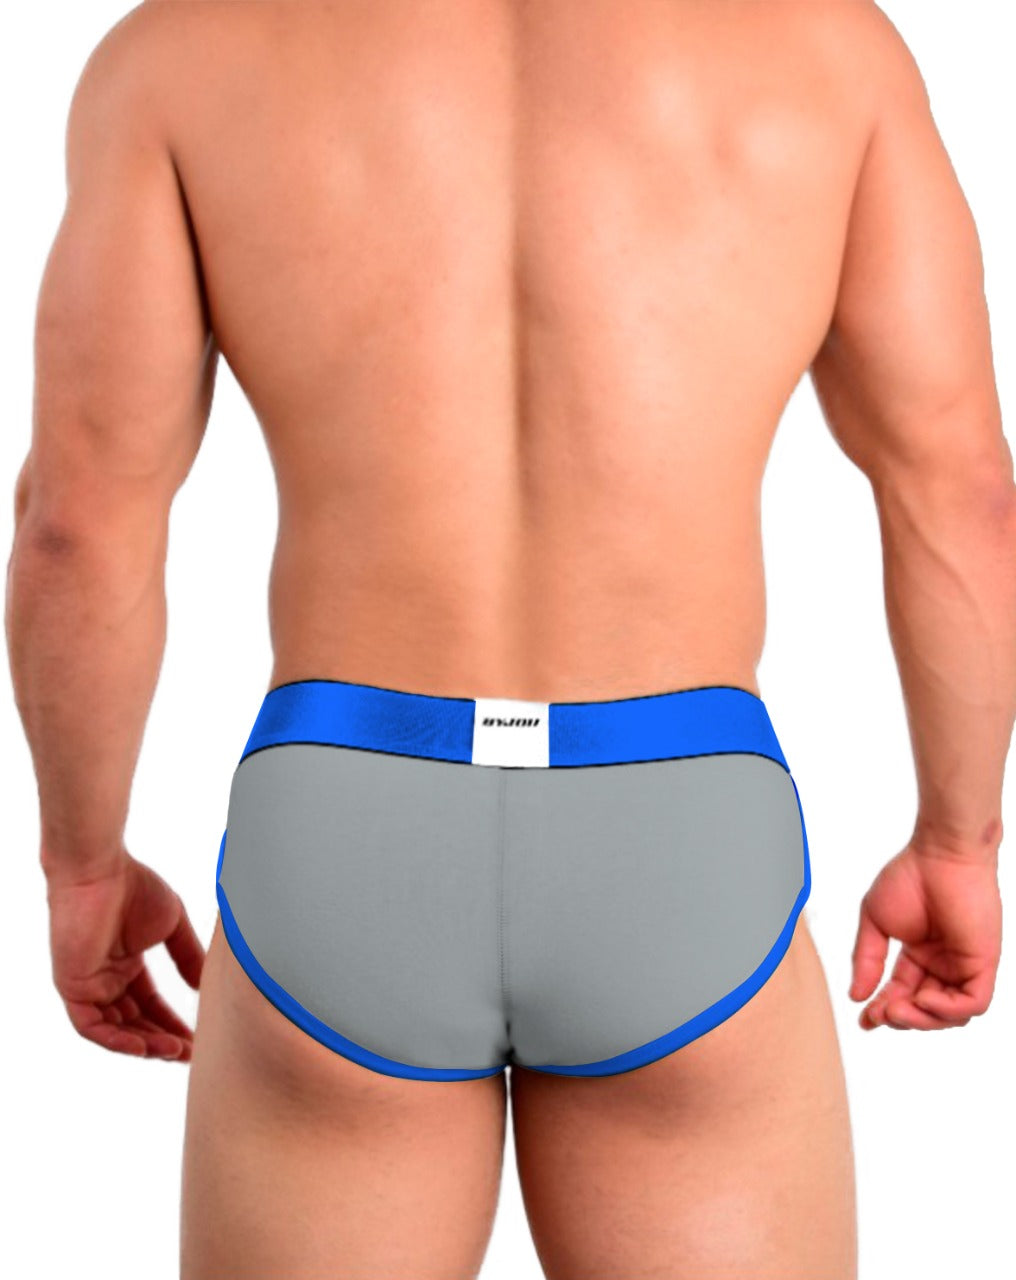 Boxer Brief Men Andy  Byjou Underwear Calzon  BANMX015